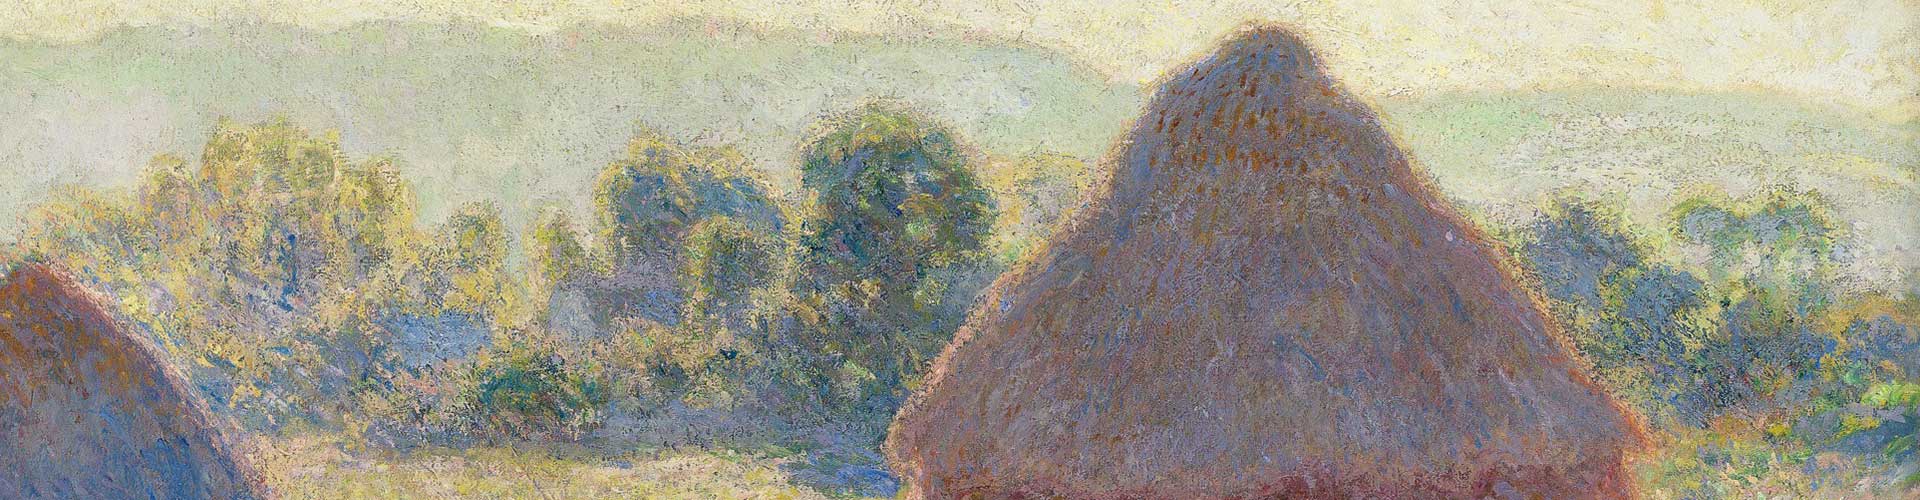 Claude Monet's Meules, milieu du jour [Haystacks, midday], 1890